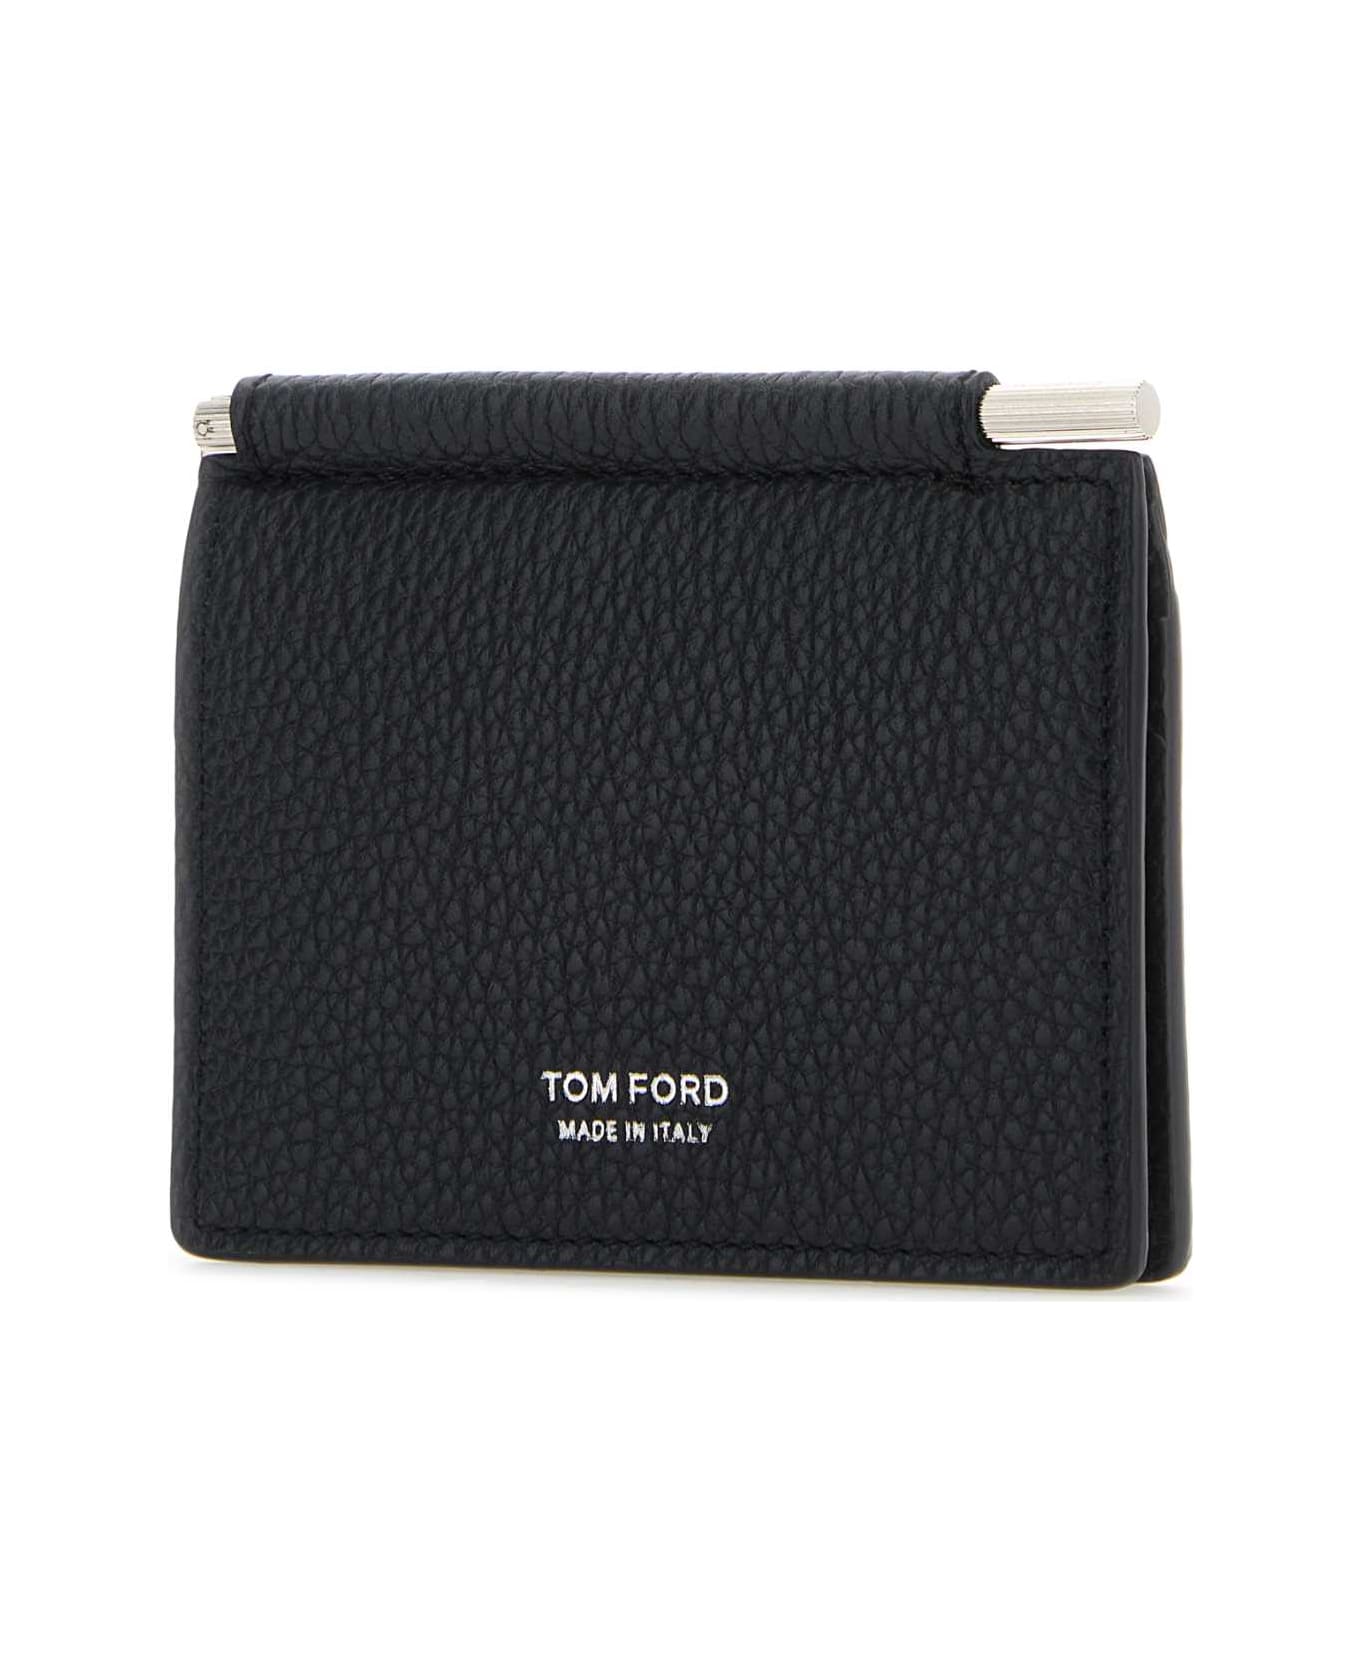 Tom Ford Black Leather Card Holder - MIDNIGHTBLUE 財布